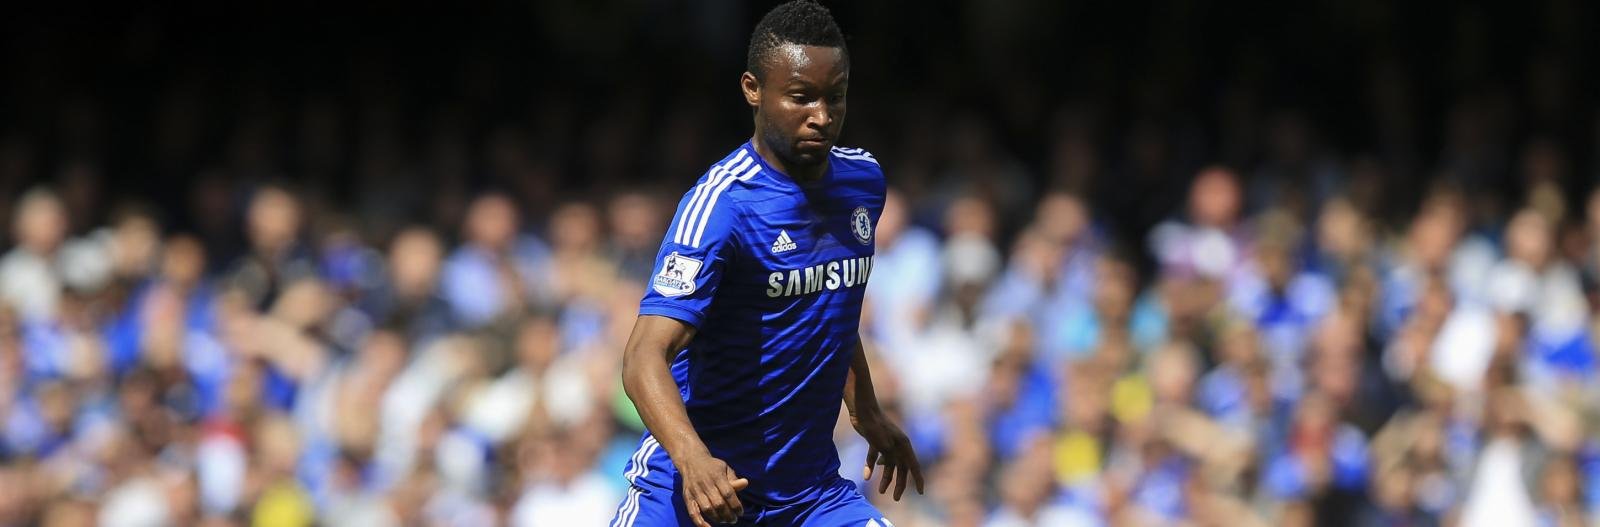 Chelsea subject to £6m offer for Nigeria international midfielder